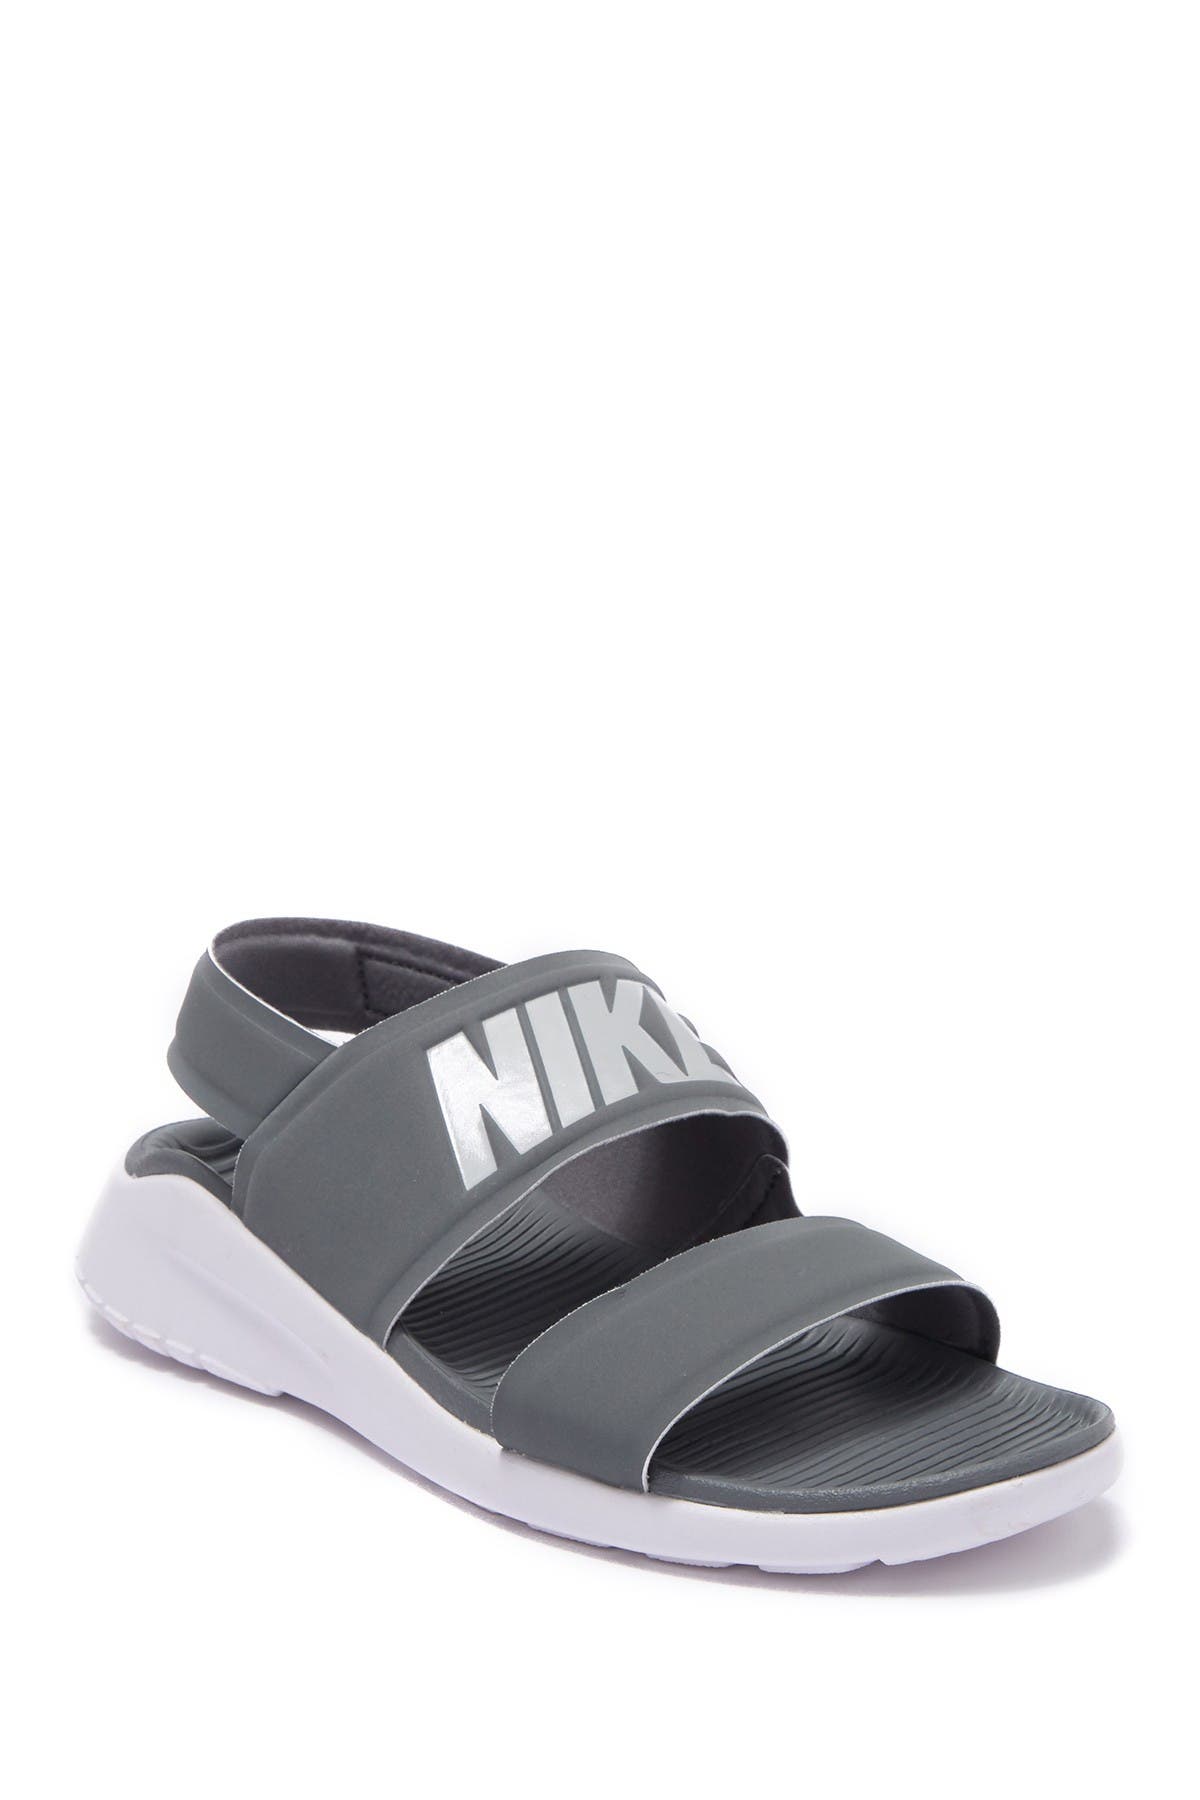 nike tanjun sandals black and white